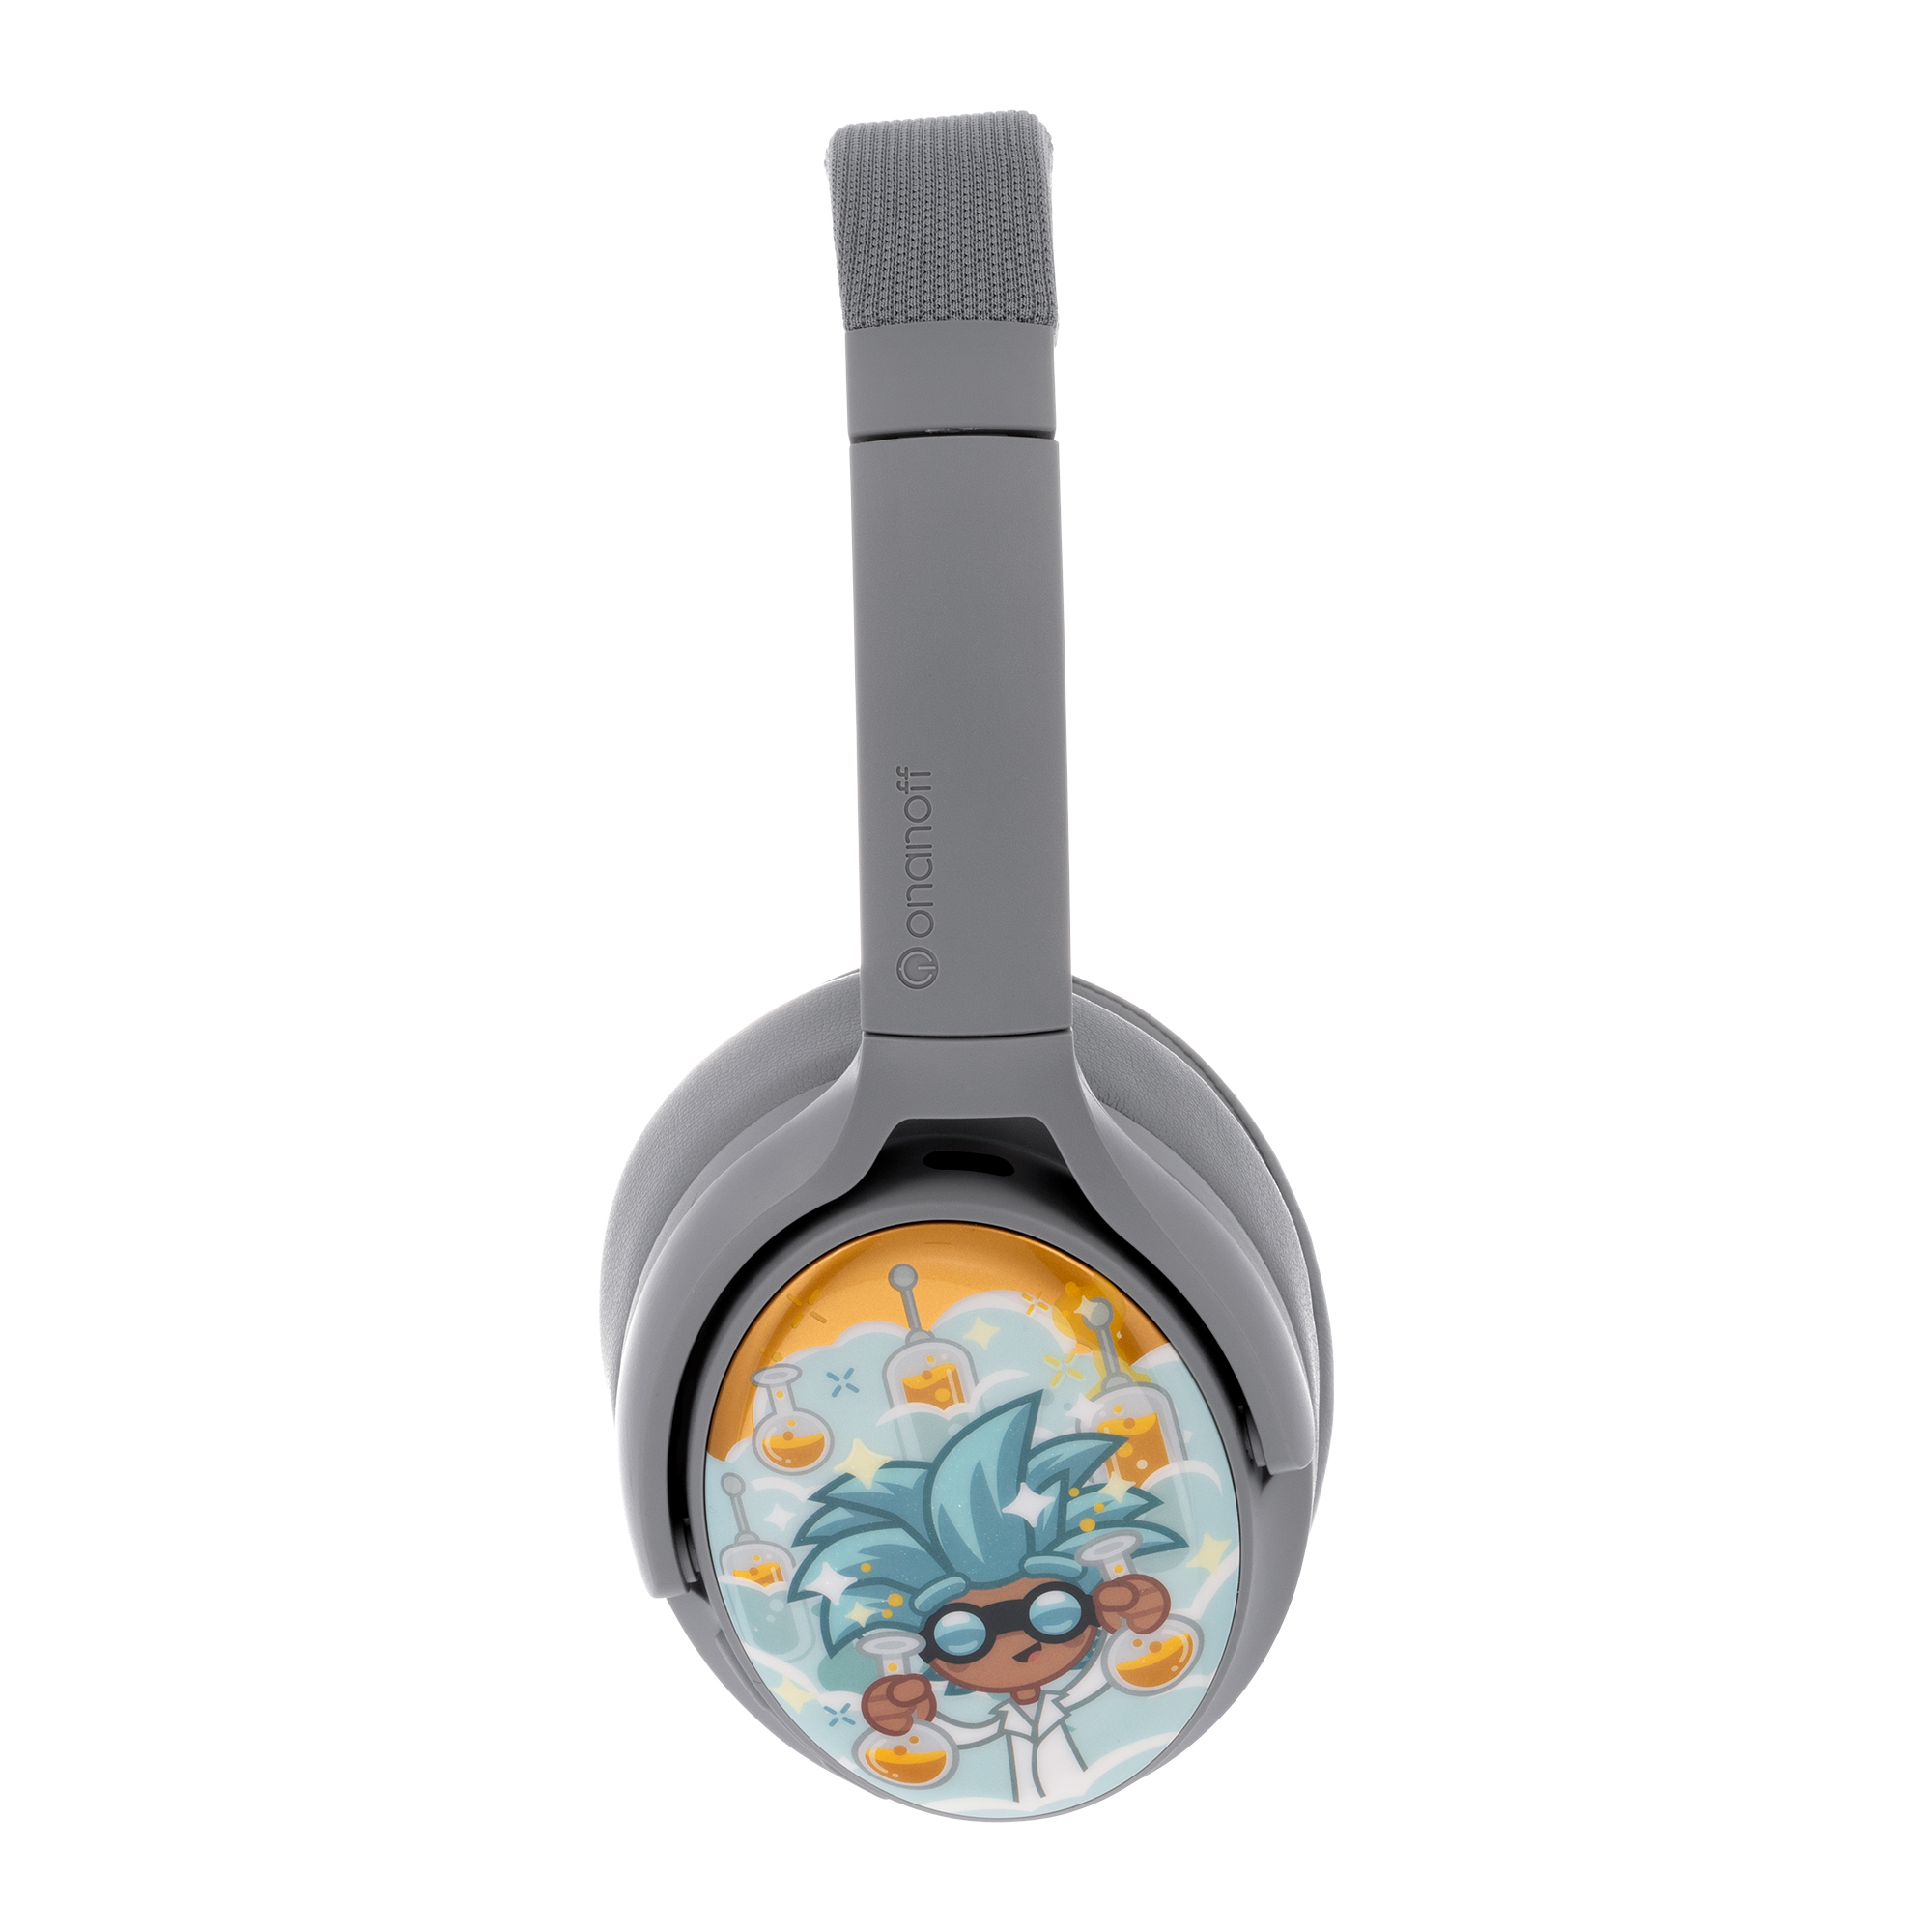 Grau BUDDYPHONES Cosmos Bluetooth Kopfhörer Over-ear Plus, Kinder